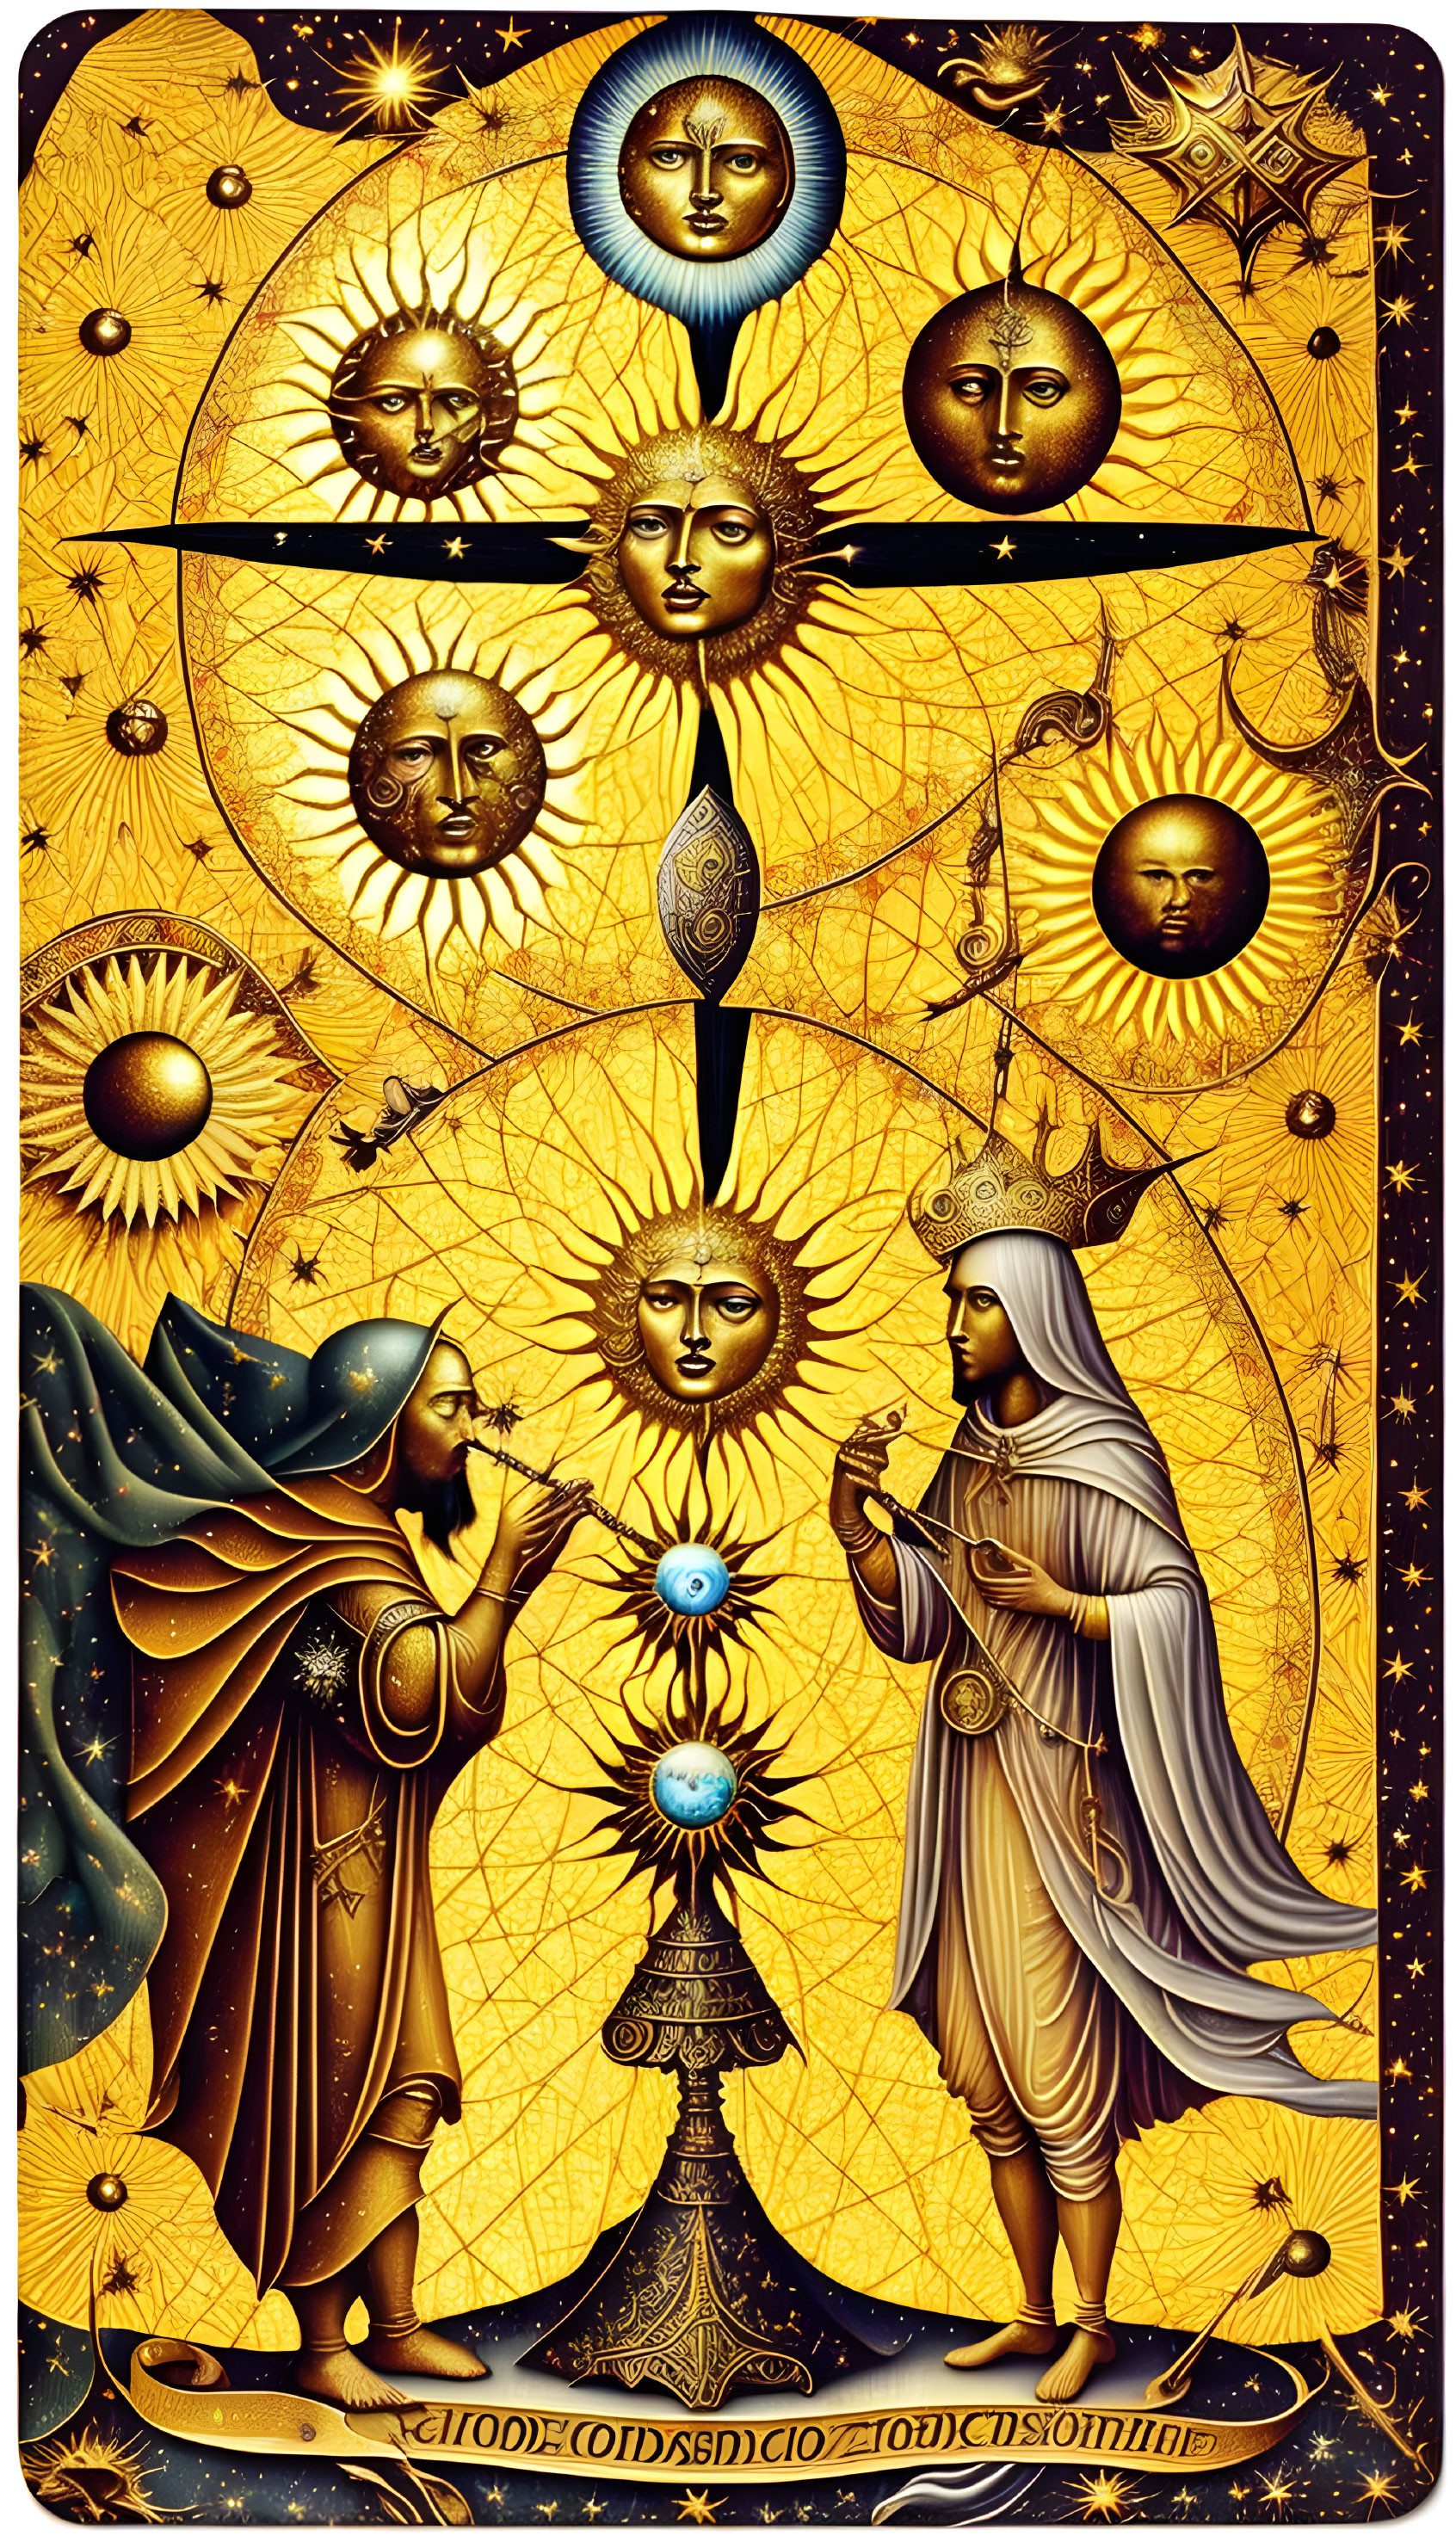 Tarot: The sun